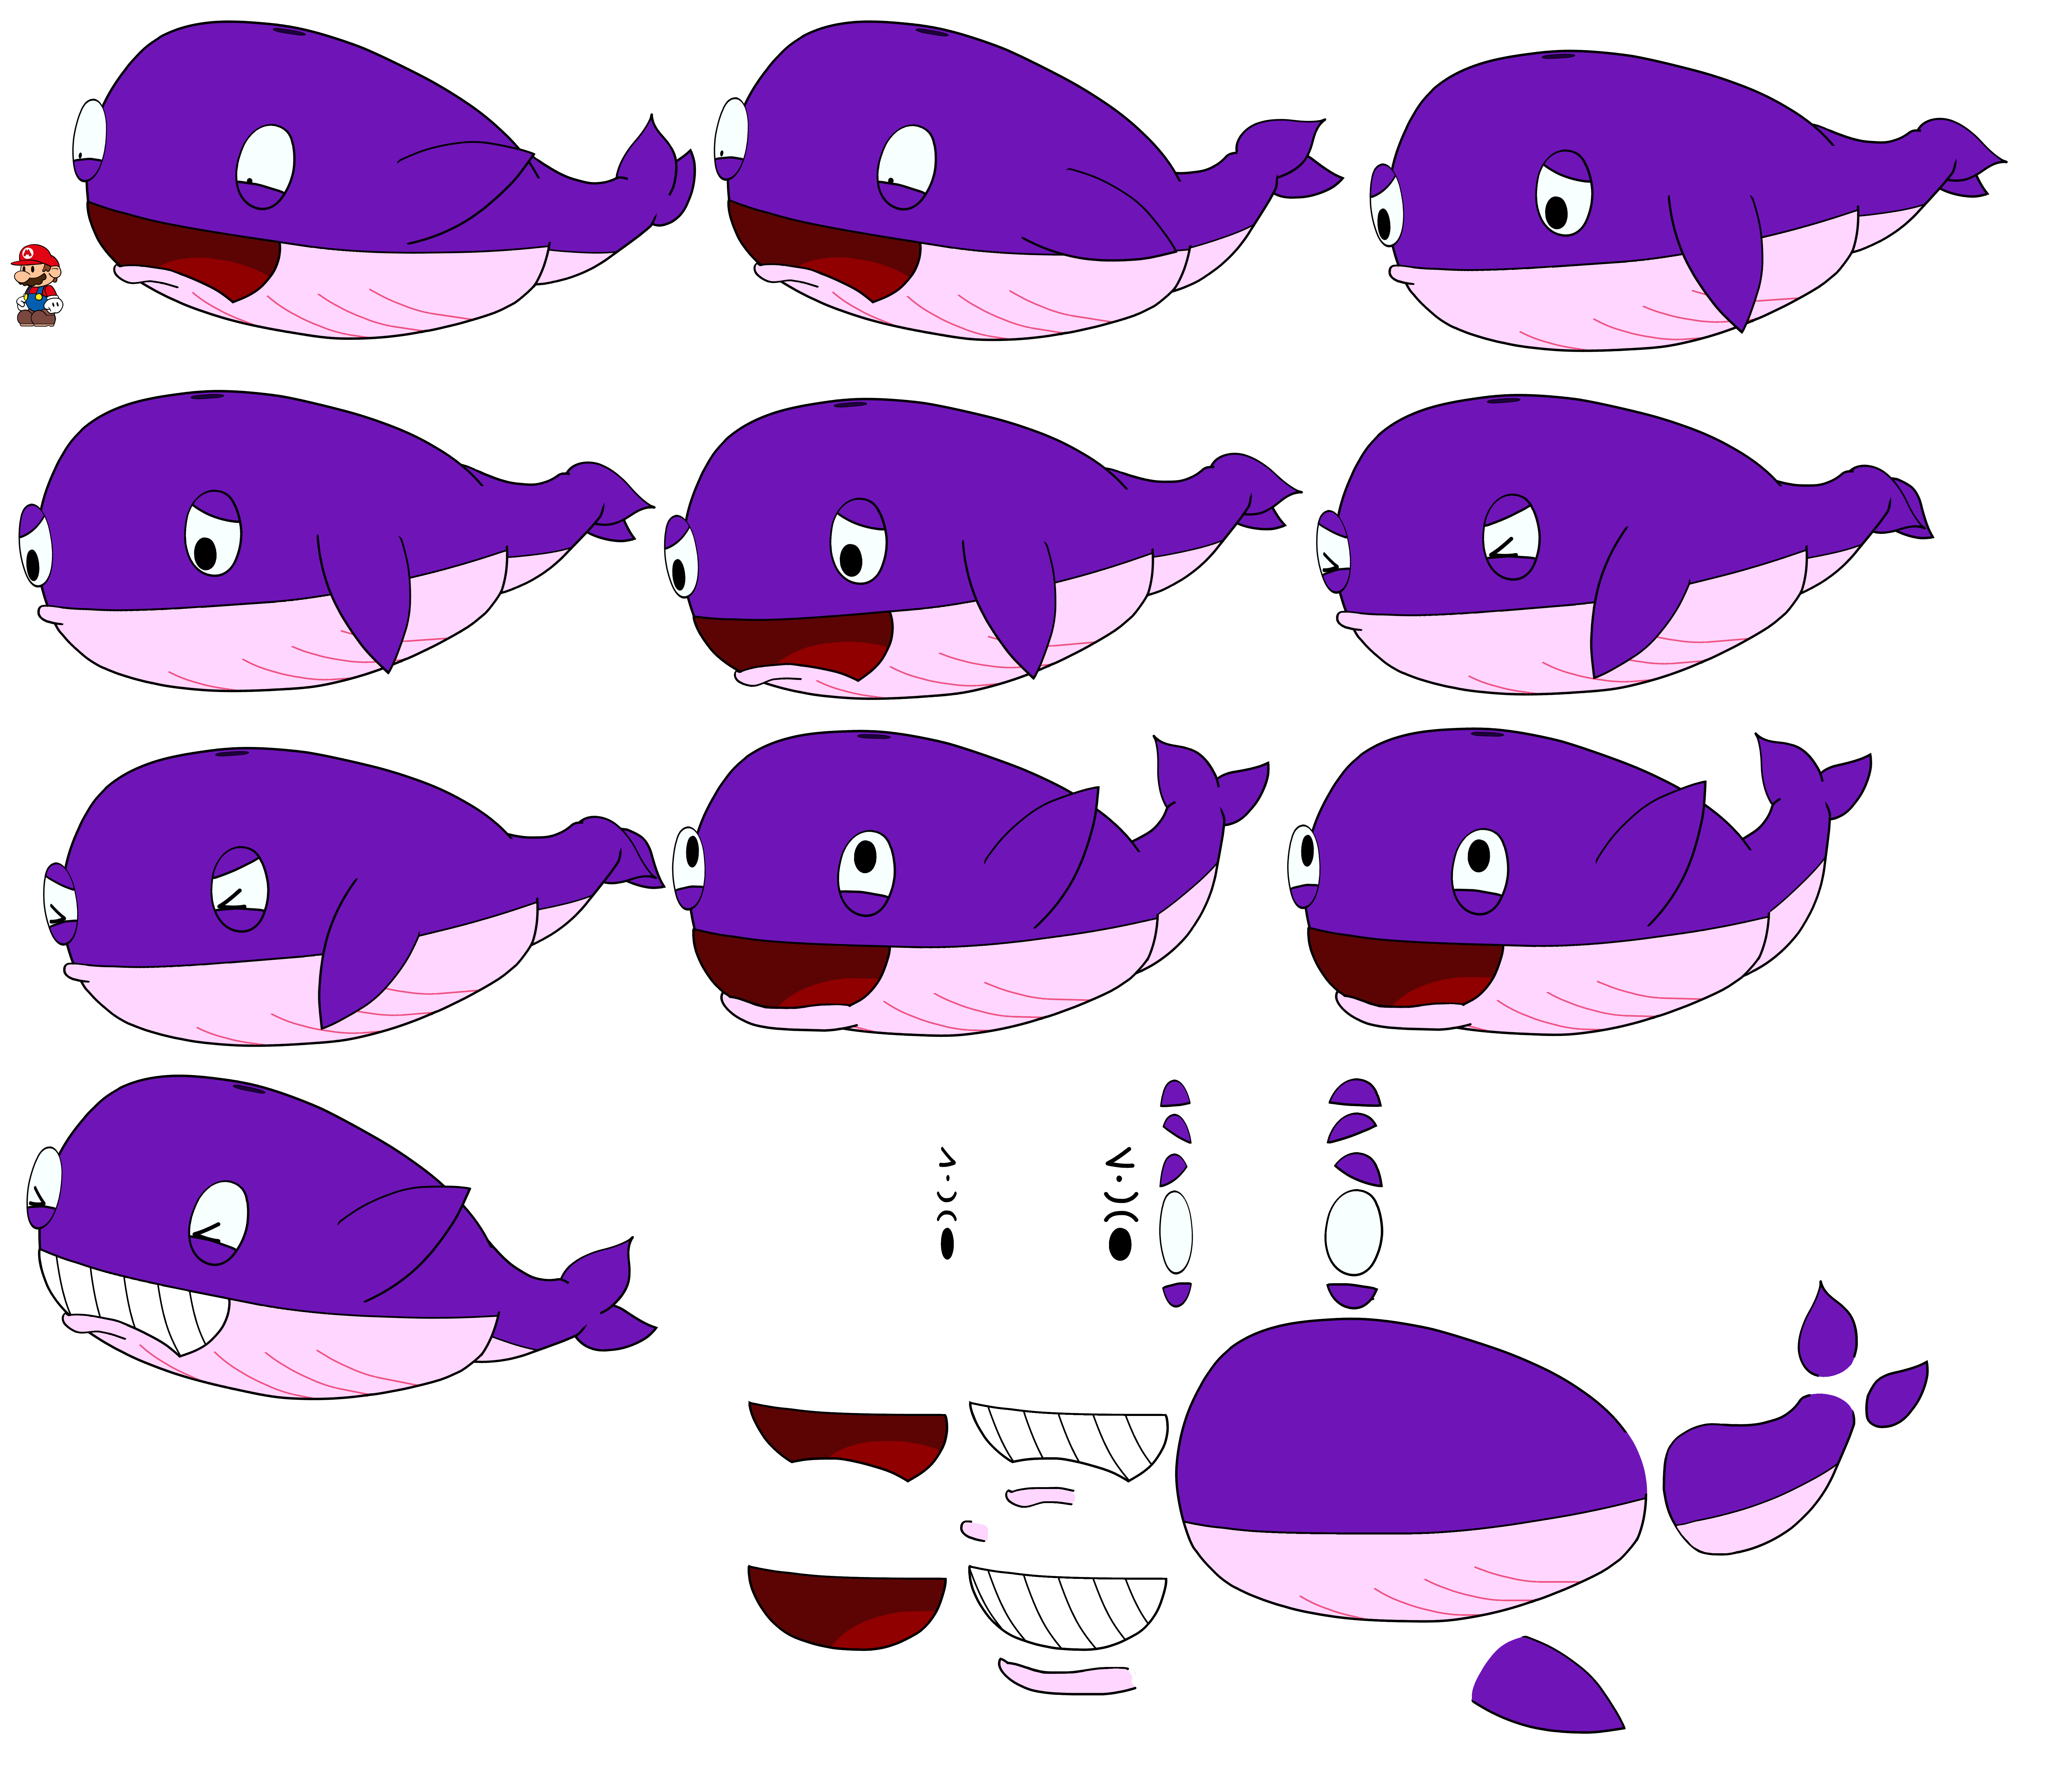 Mario Customs - Whale (SMB2, Paper Mario-Style) 2 / 2